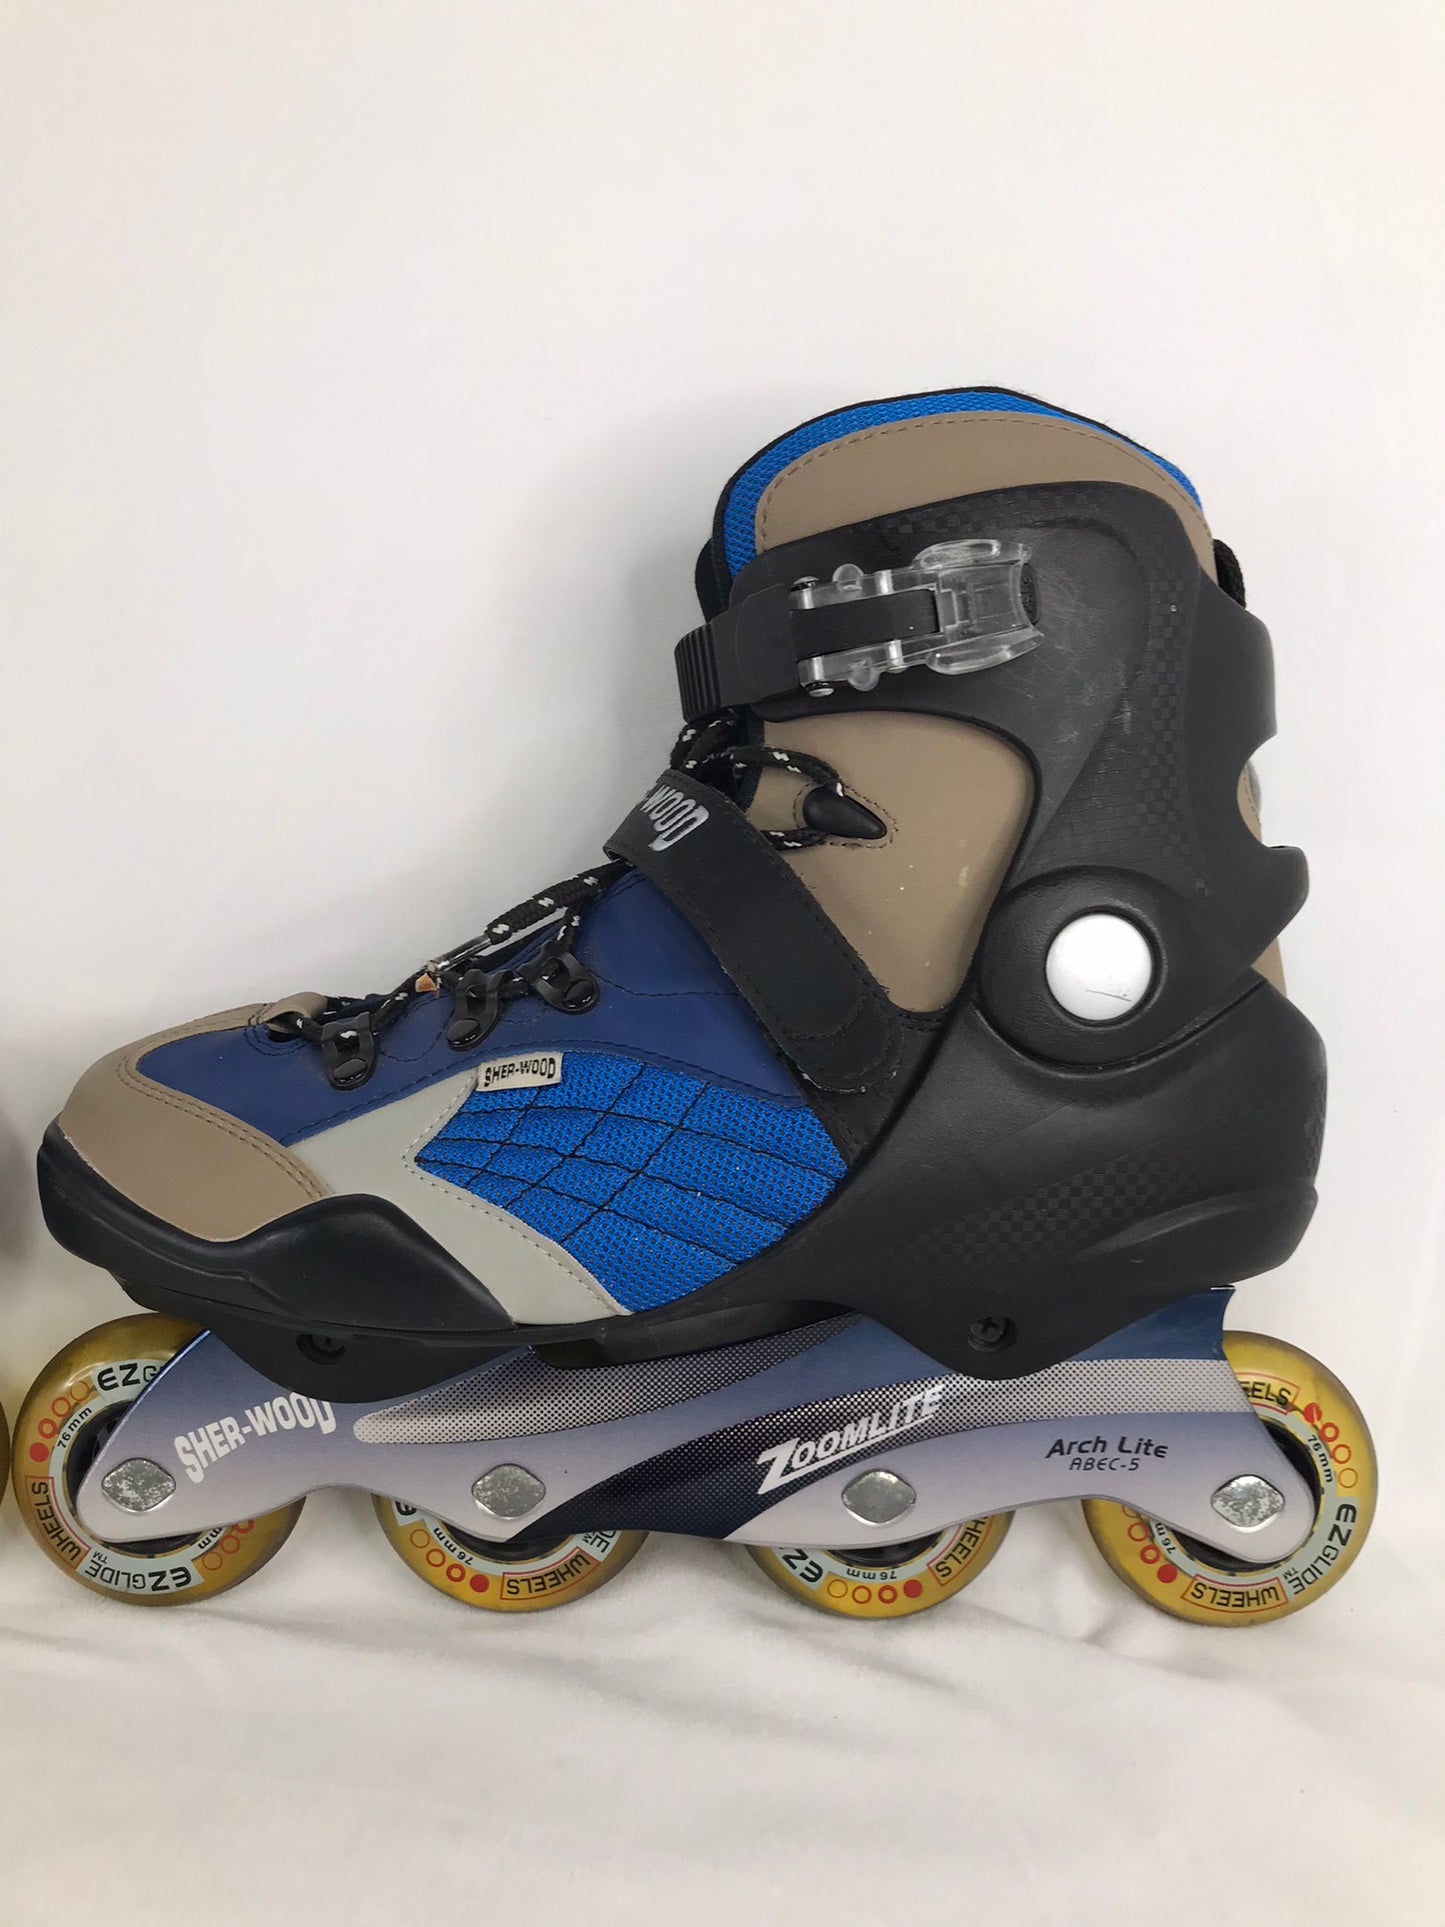 Inline Roller Skates Men's Size 11 Sherwood Black Blue Tan Rubber Wheels New Demo Model